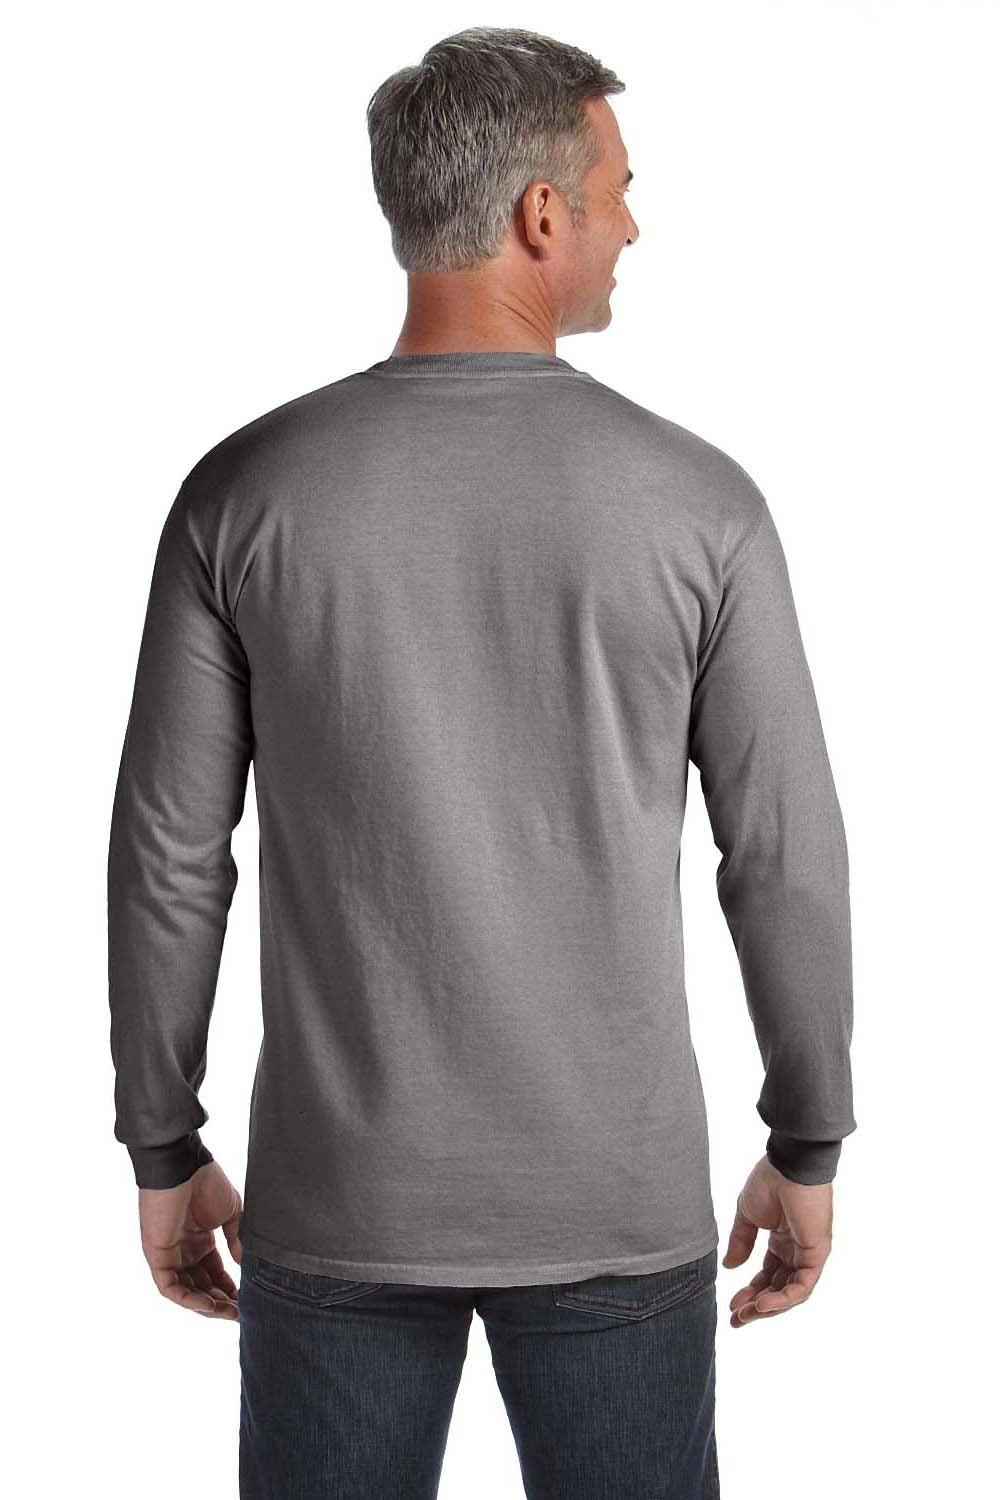 Comfort Colors C4410 Mens Long Sleeve Crewneck T-Shirt w/ Pocket Grey Back